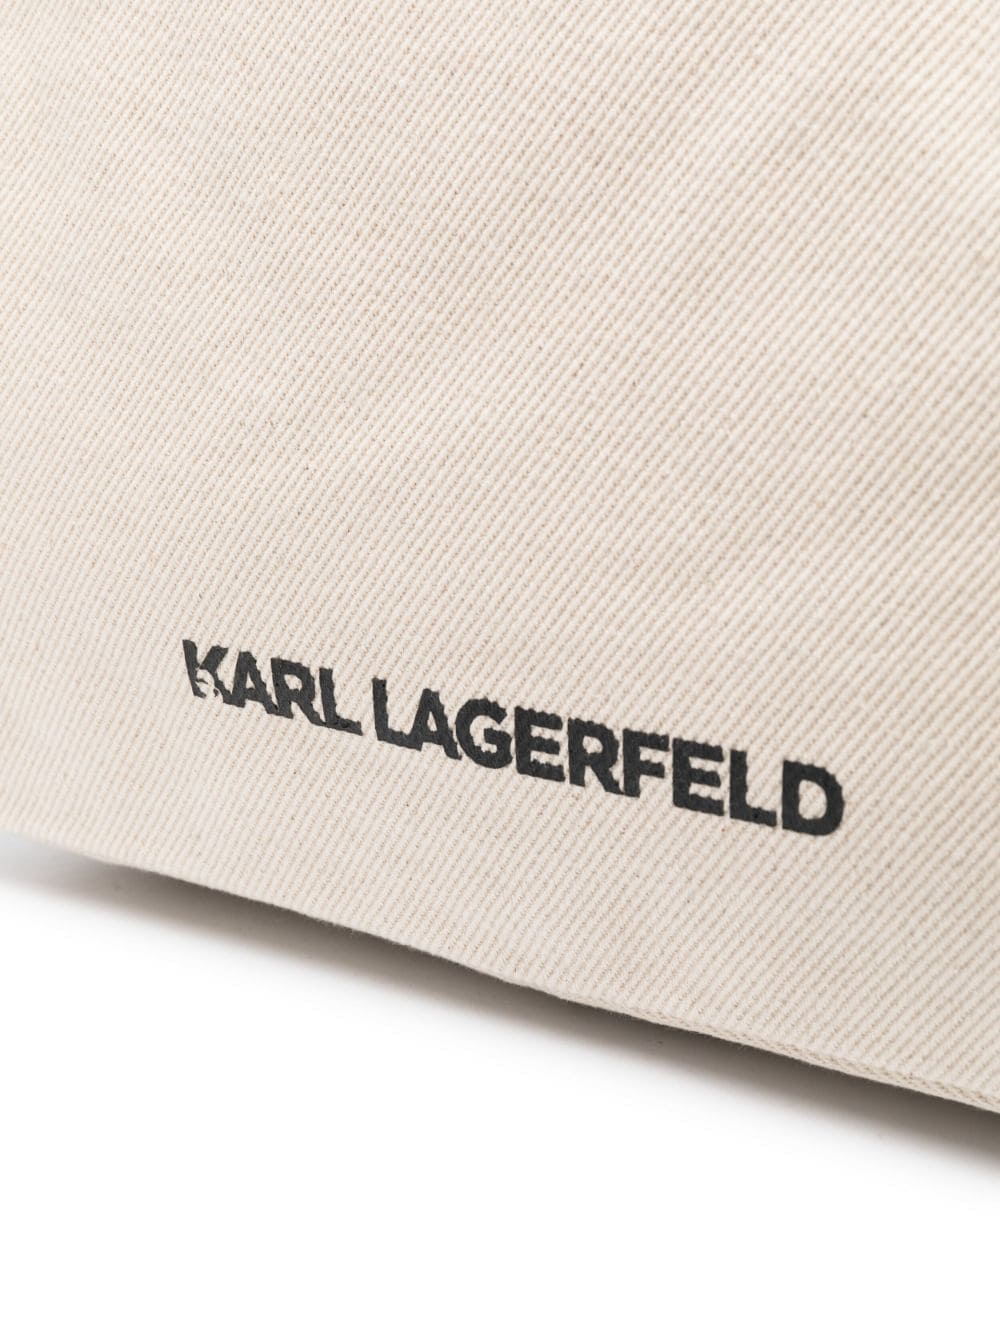 Karl Lagerfeld K Signature canvas shopper Beige